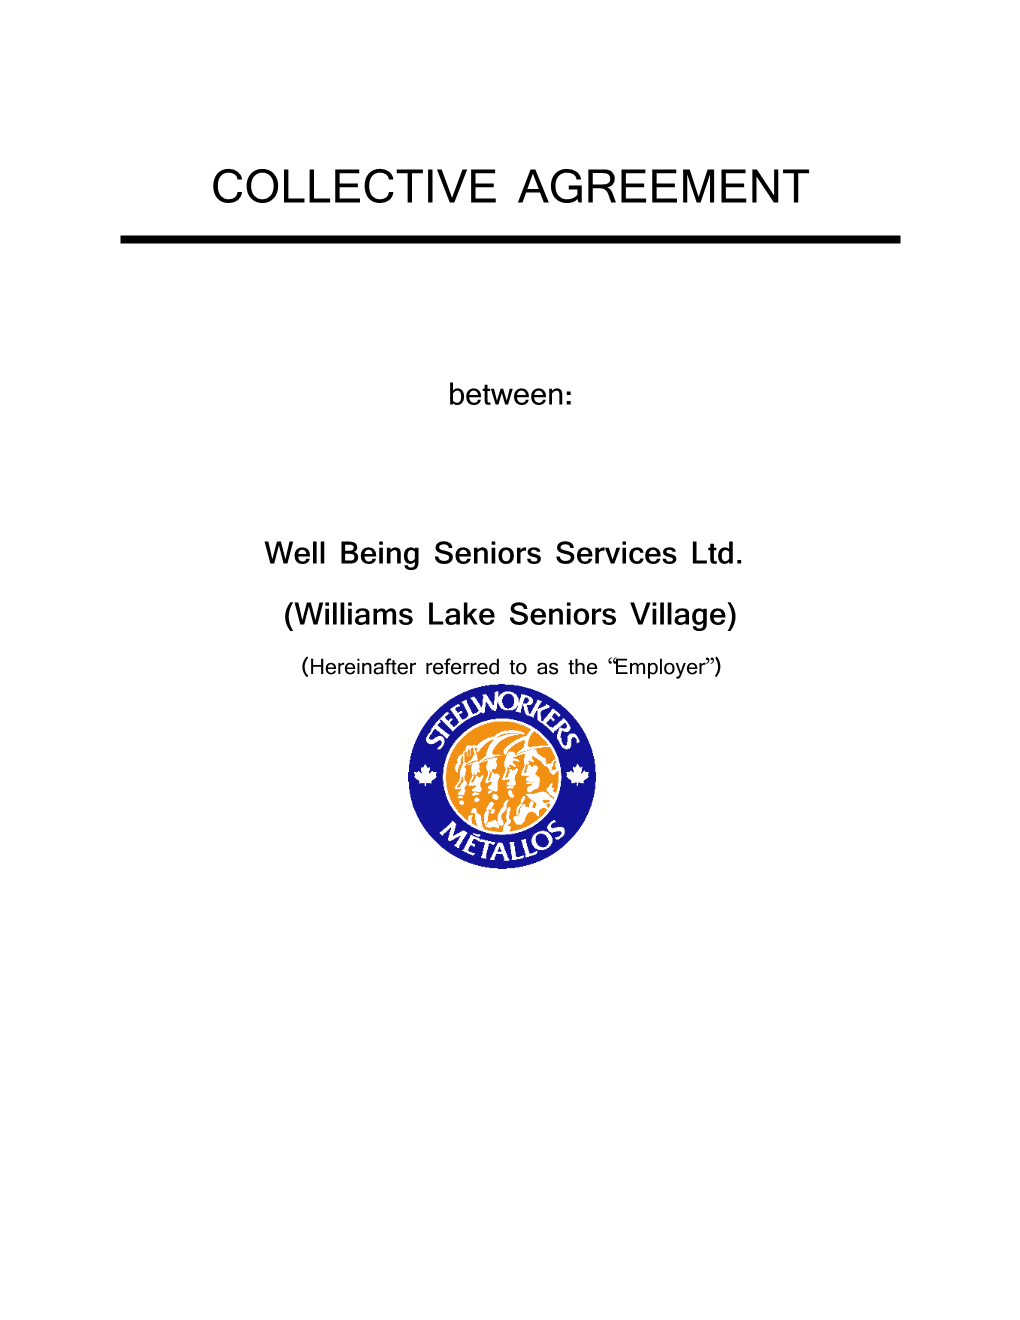 Well Being Seniors Services Ltd